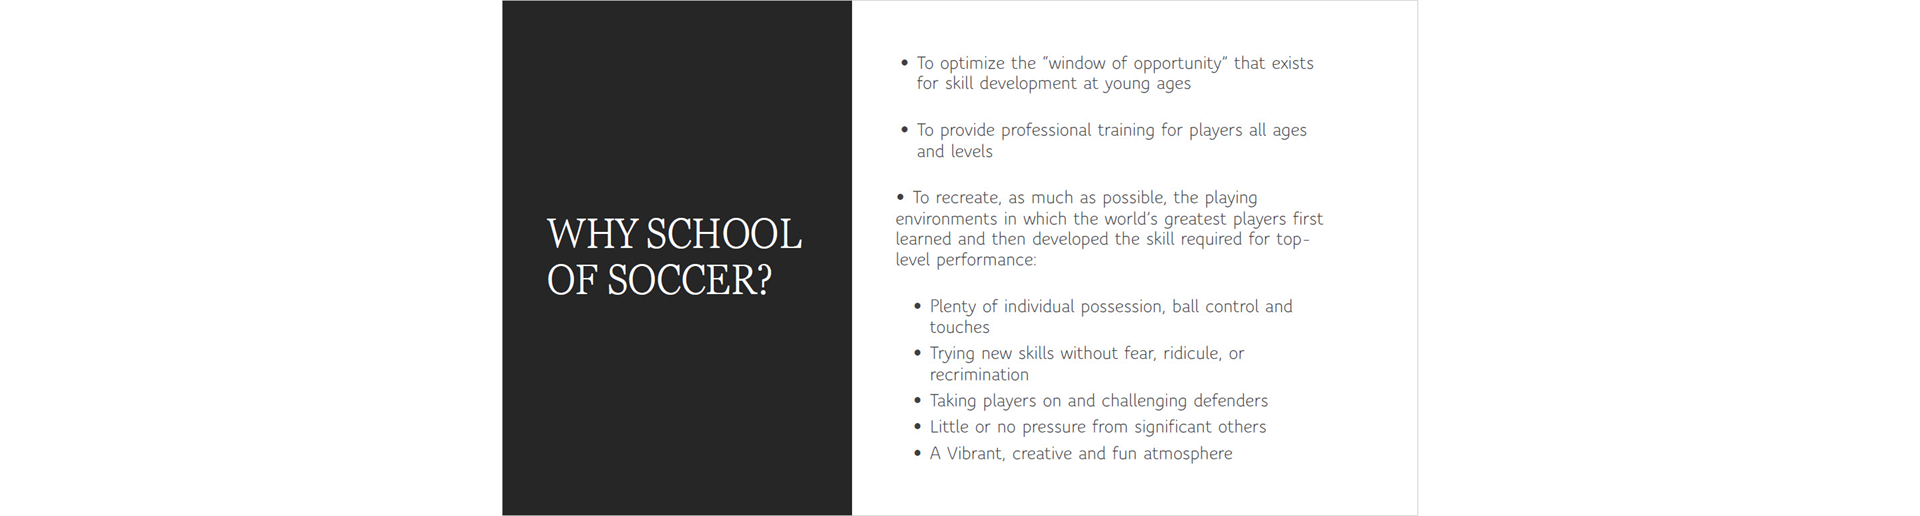 Introducing School of Soccer